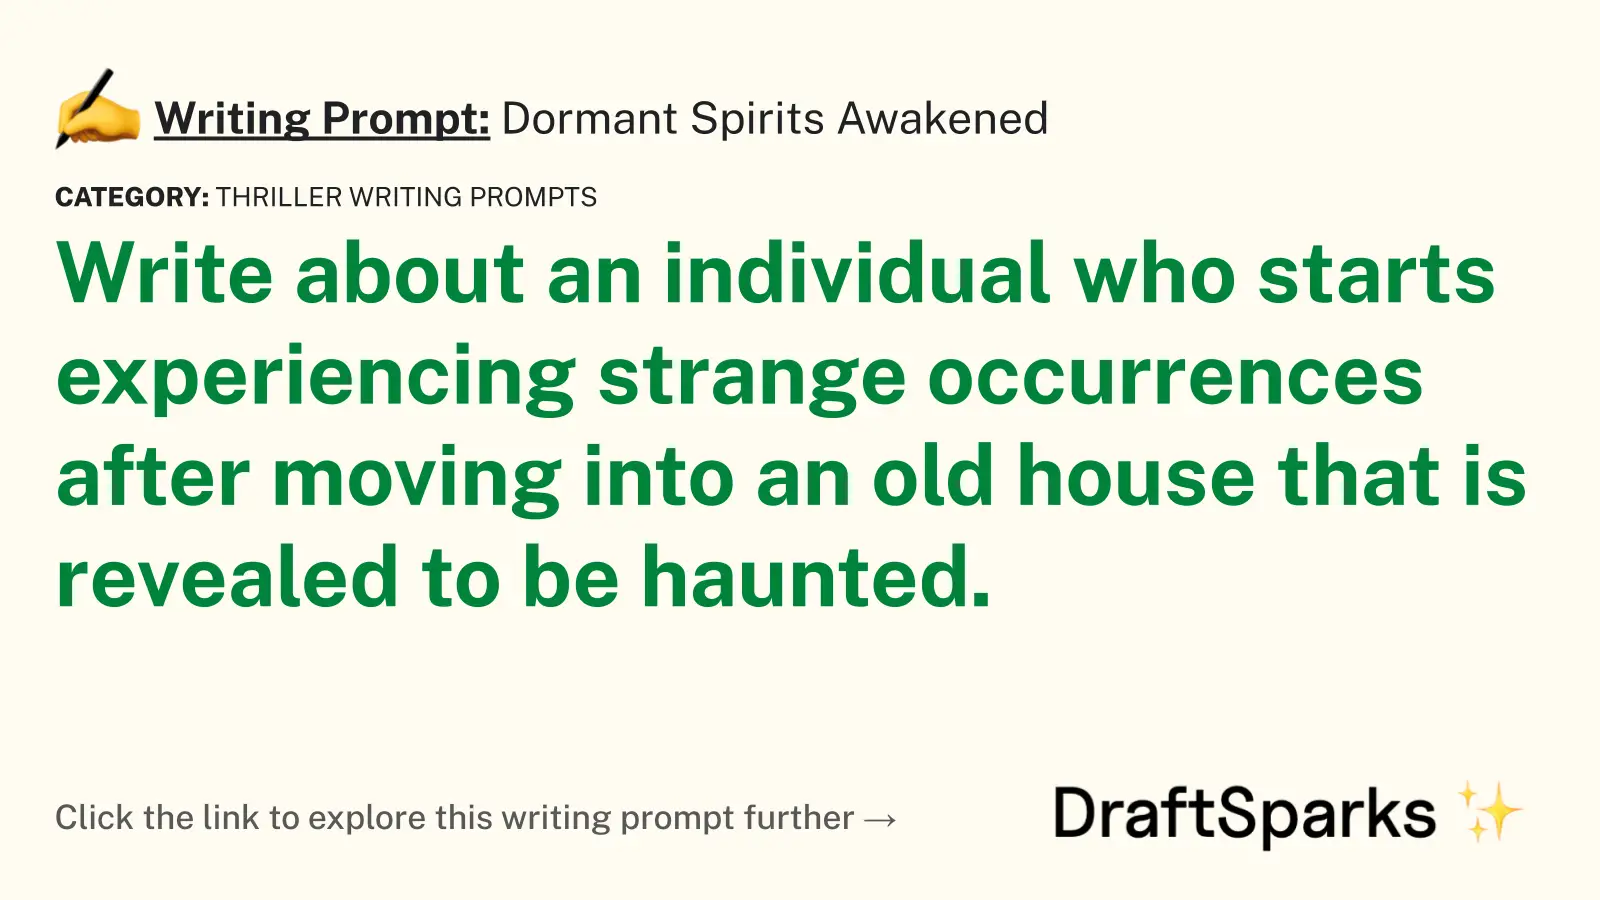 Dormant Spirits Awakened